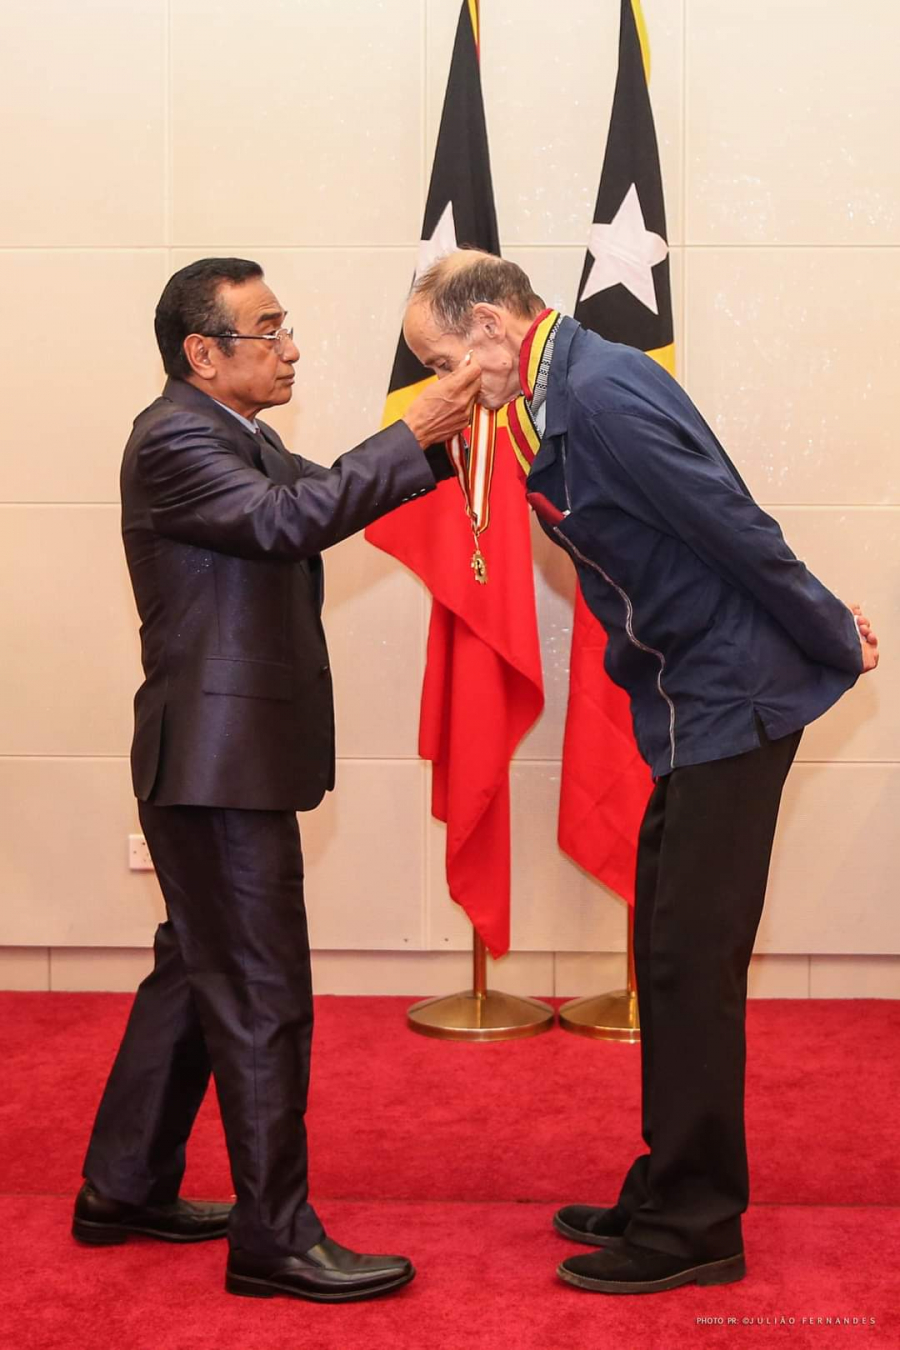 Prezidente Repúblika (PR), Francisco Guterres &#039;Lú Olo&#039; tara hela medalha kondekorasaun ba Antigu Jornalista no Eroi Timor-Leste, Max Stahl.